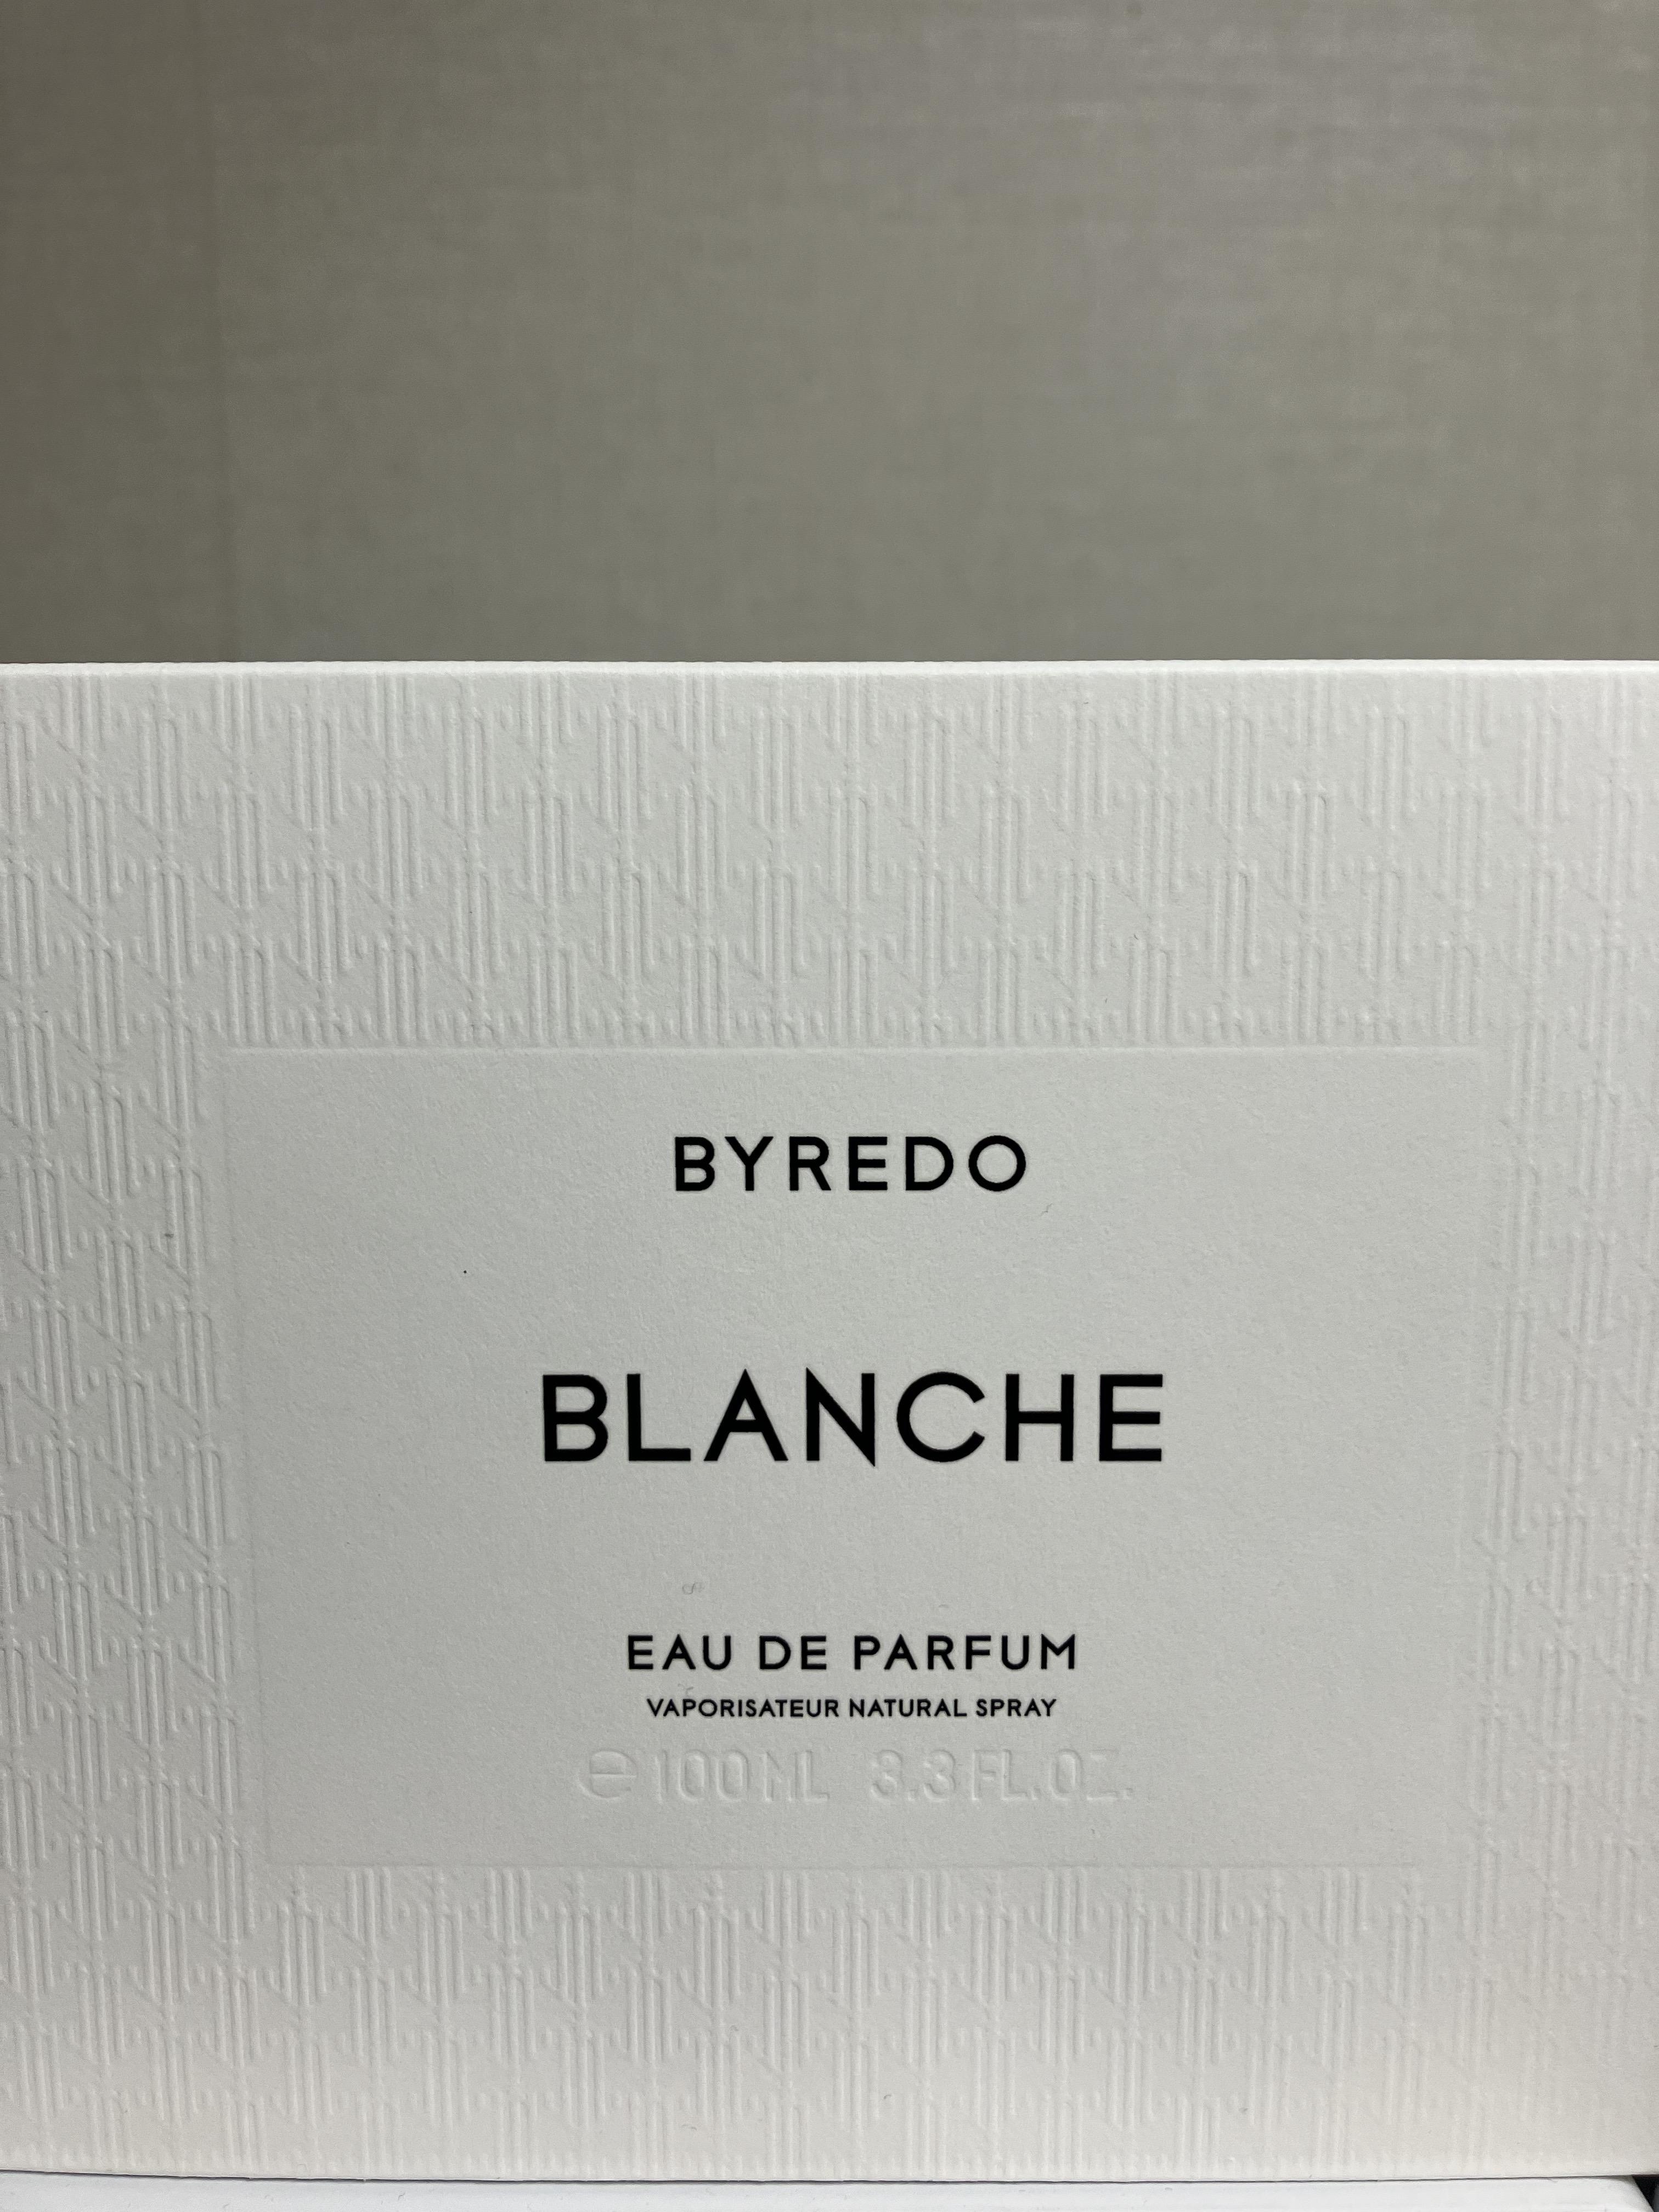 Byredo Blanche image